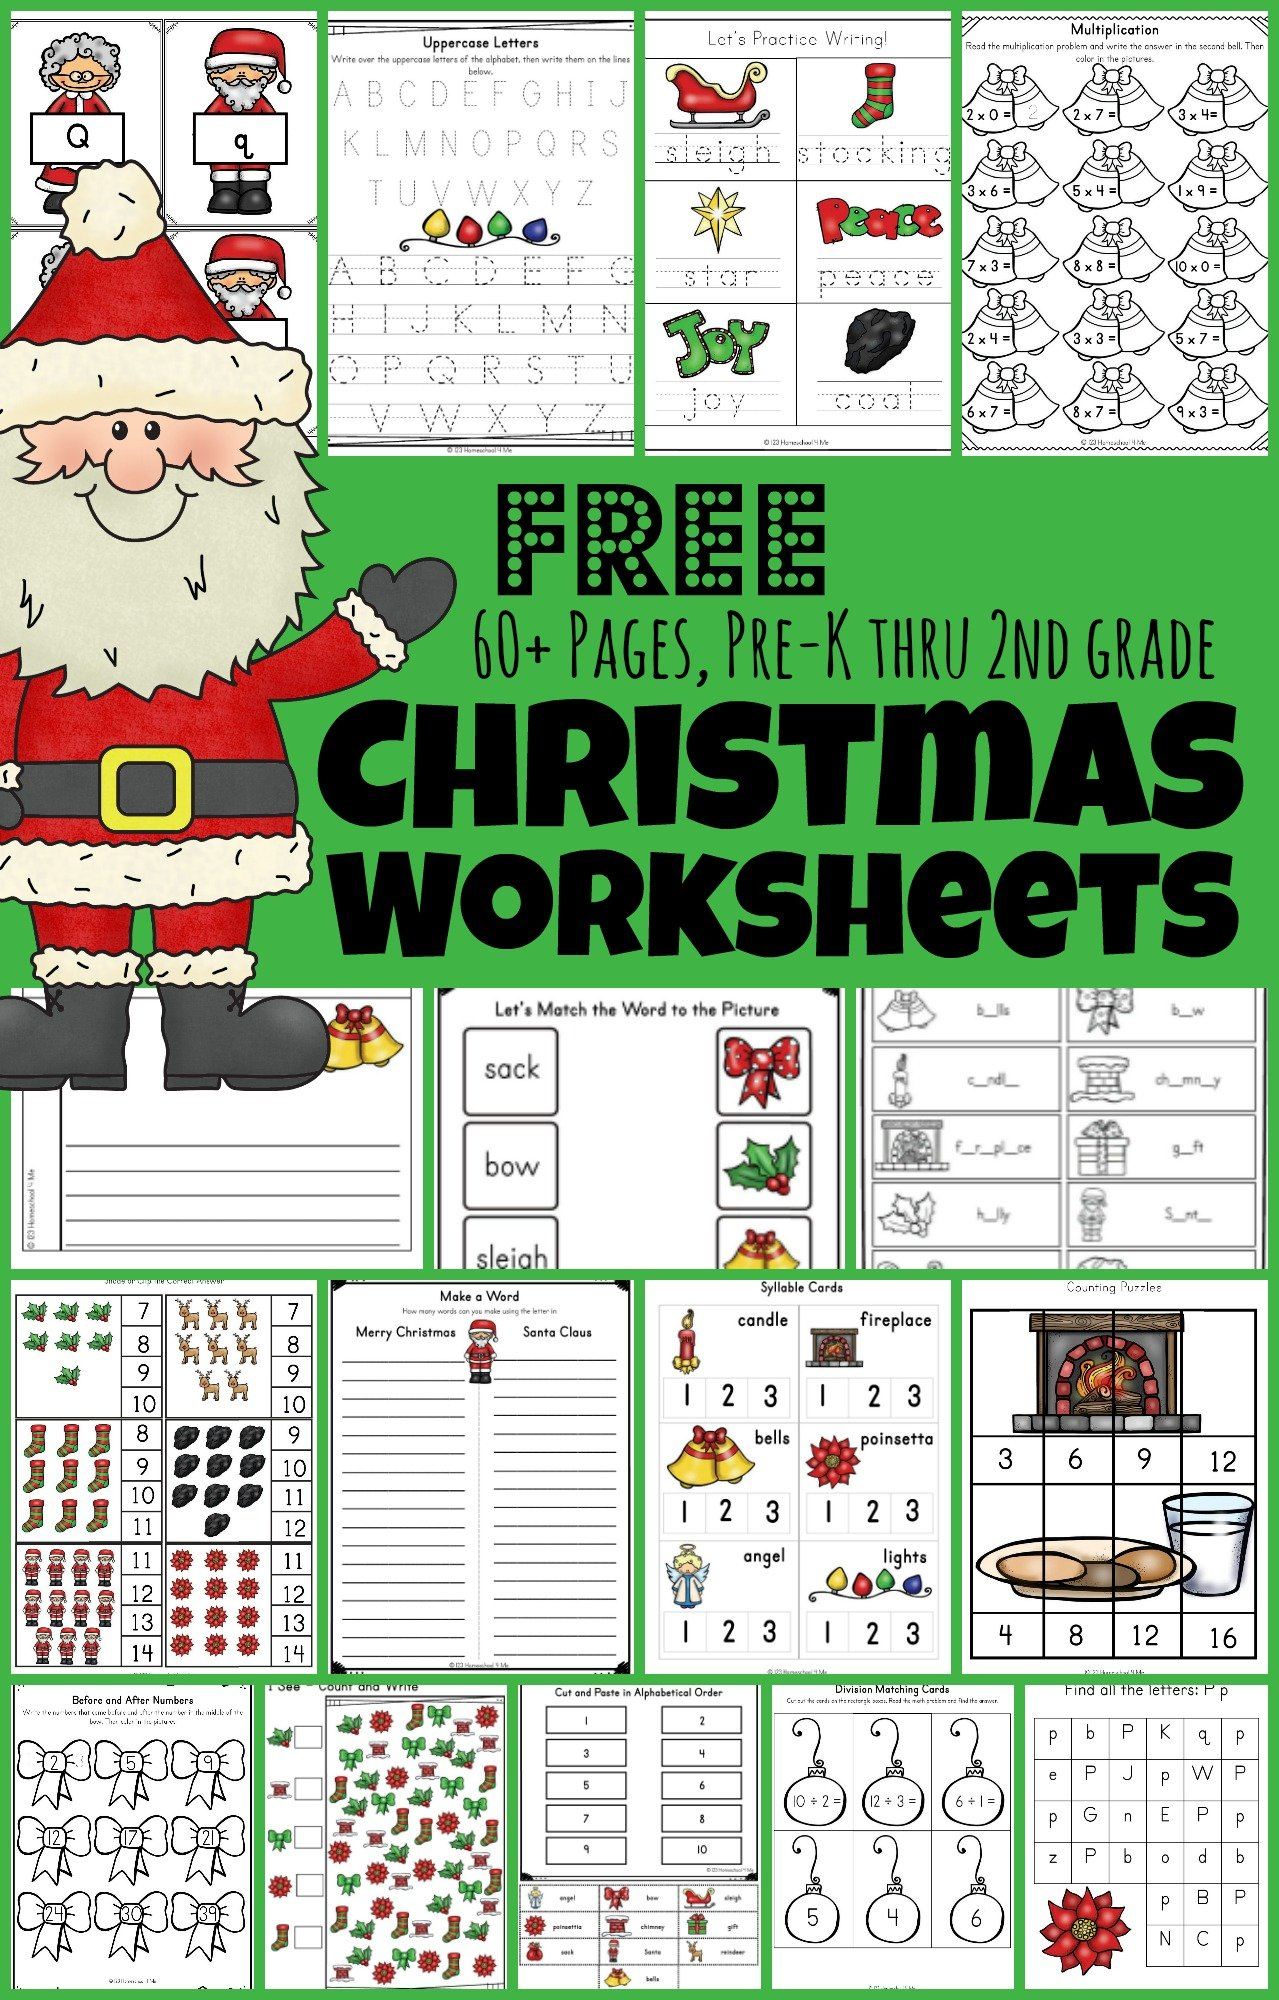 🎅🎄 Free Christmas Worksheets - Free Printable Christmas Grammar Worksheets